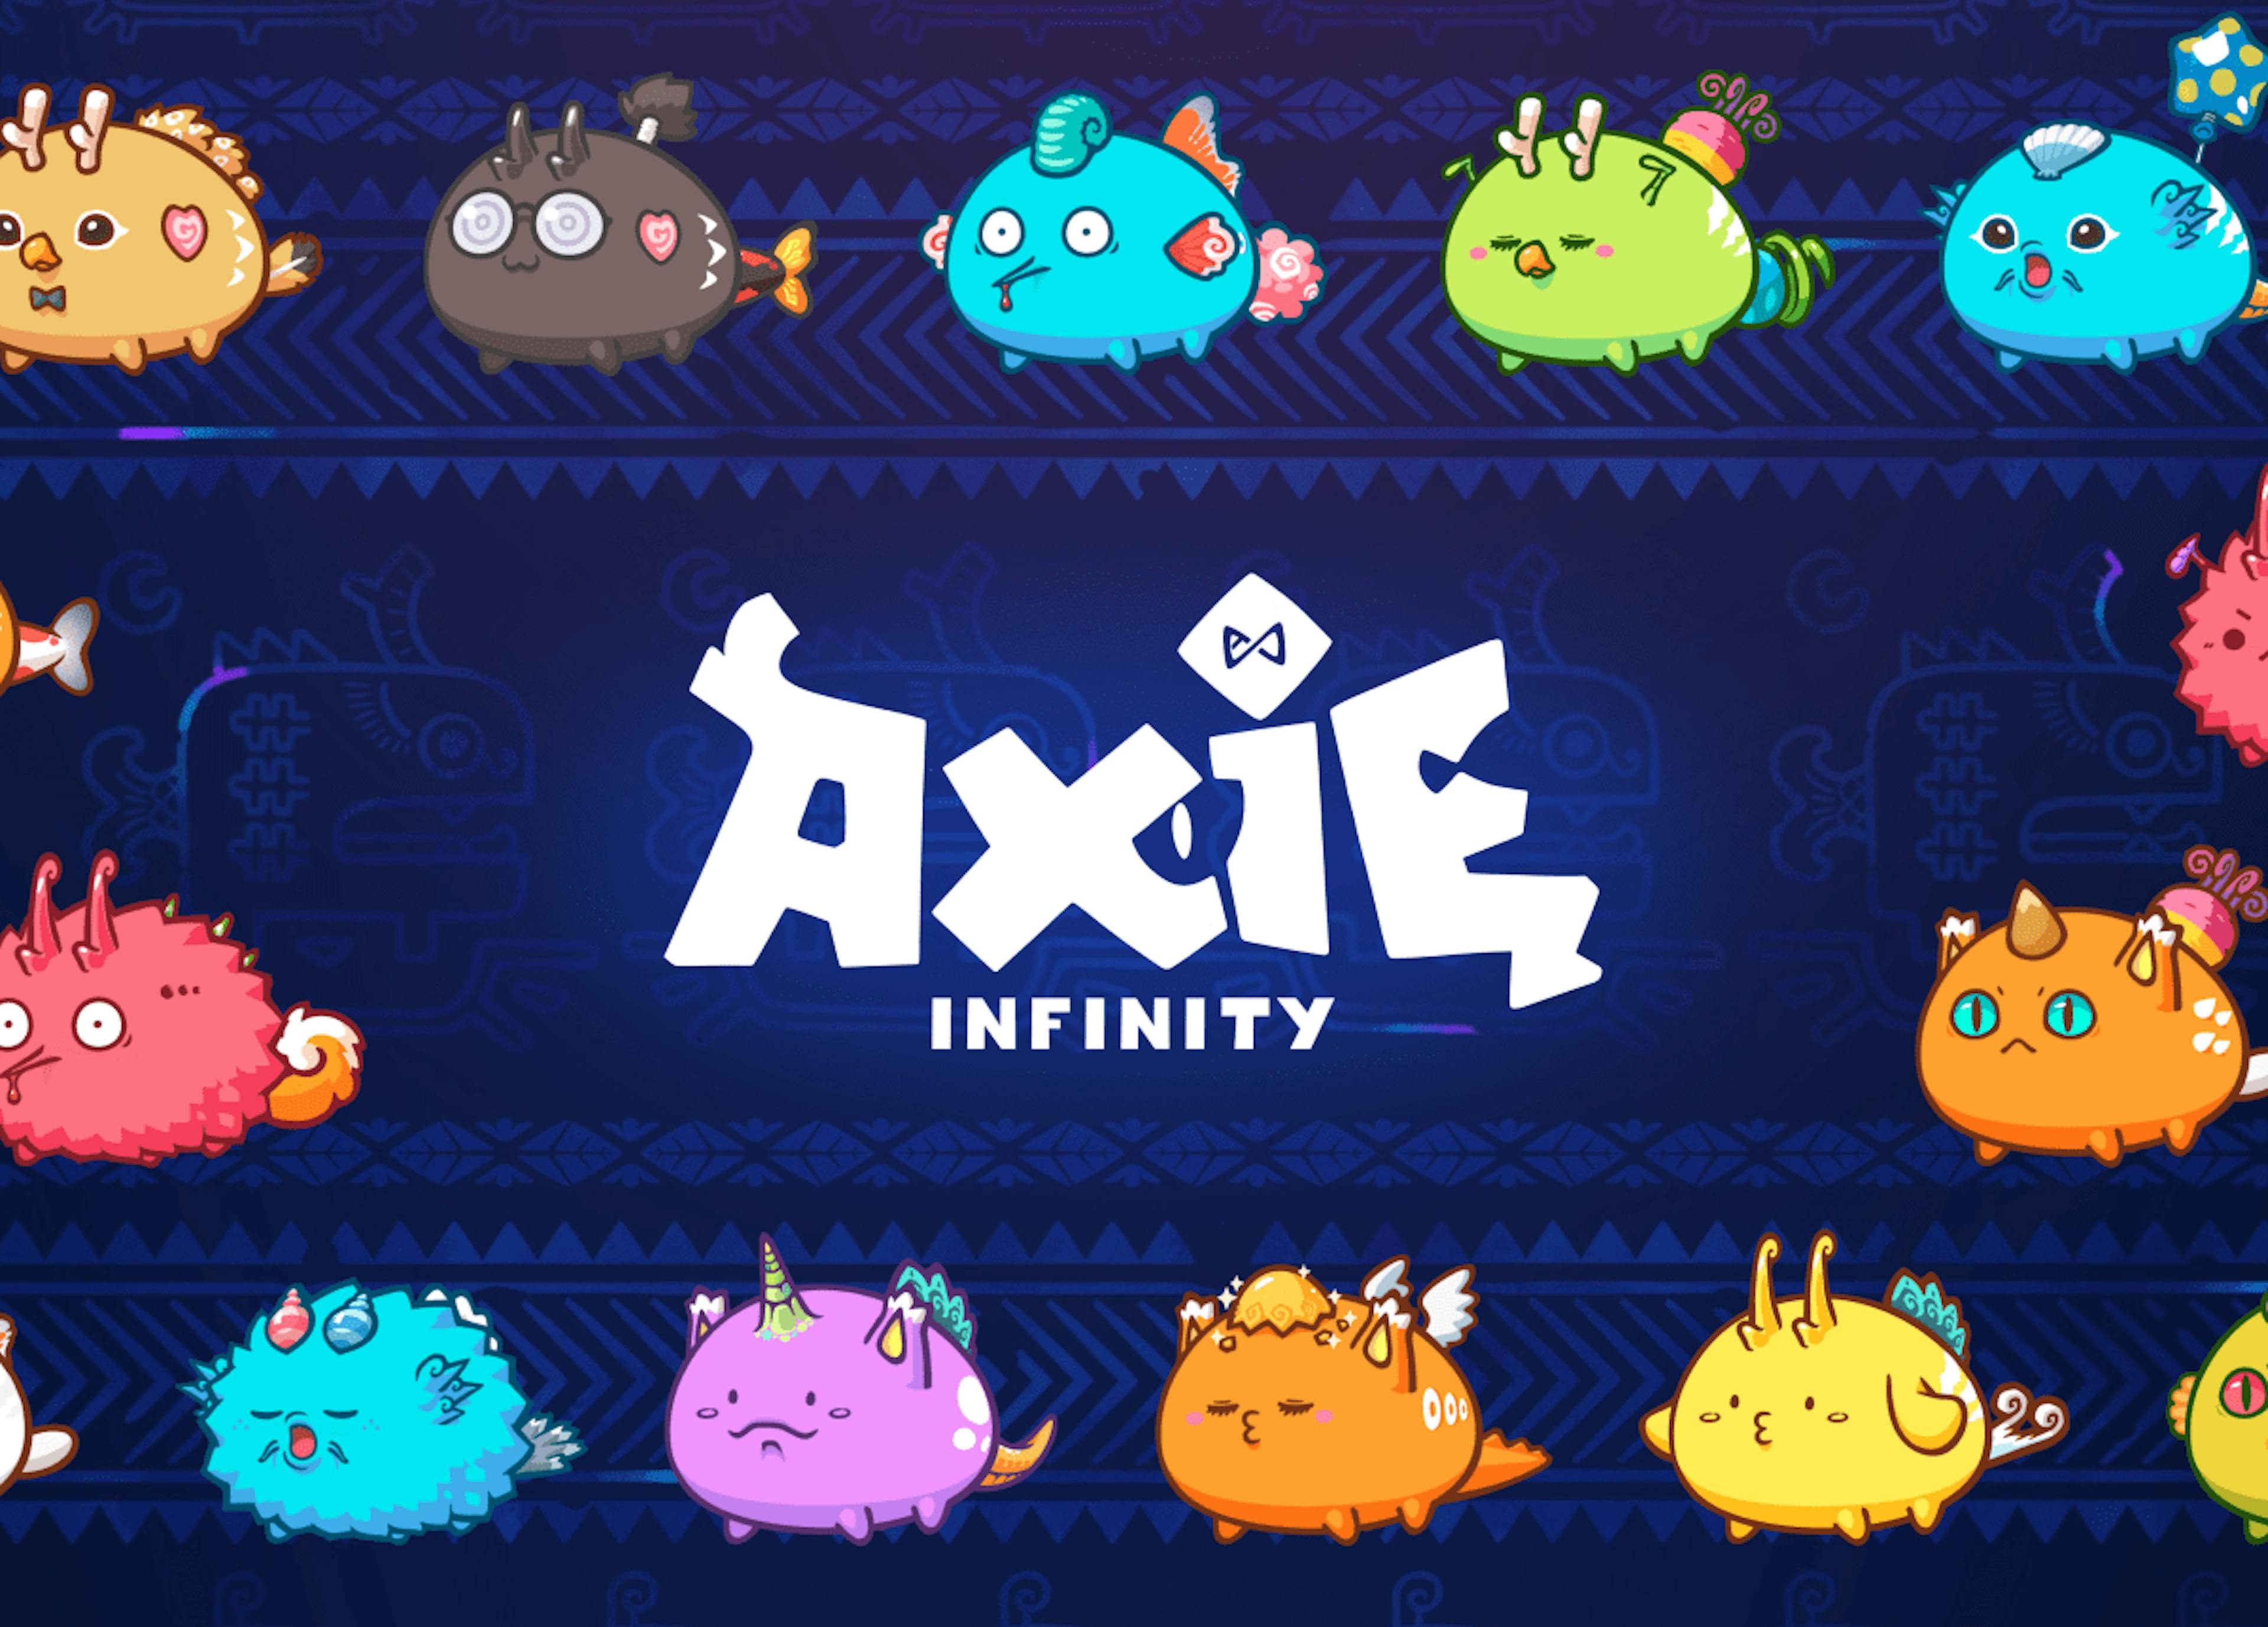 Axie Infinity's Axie characters